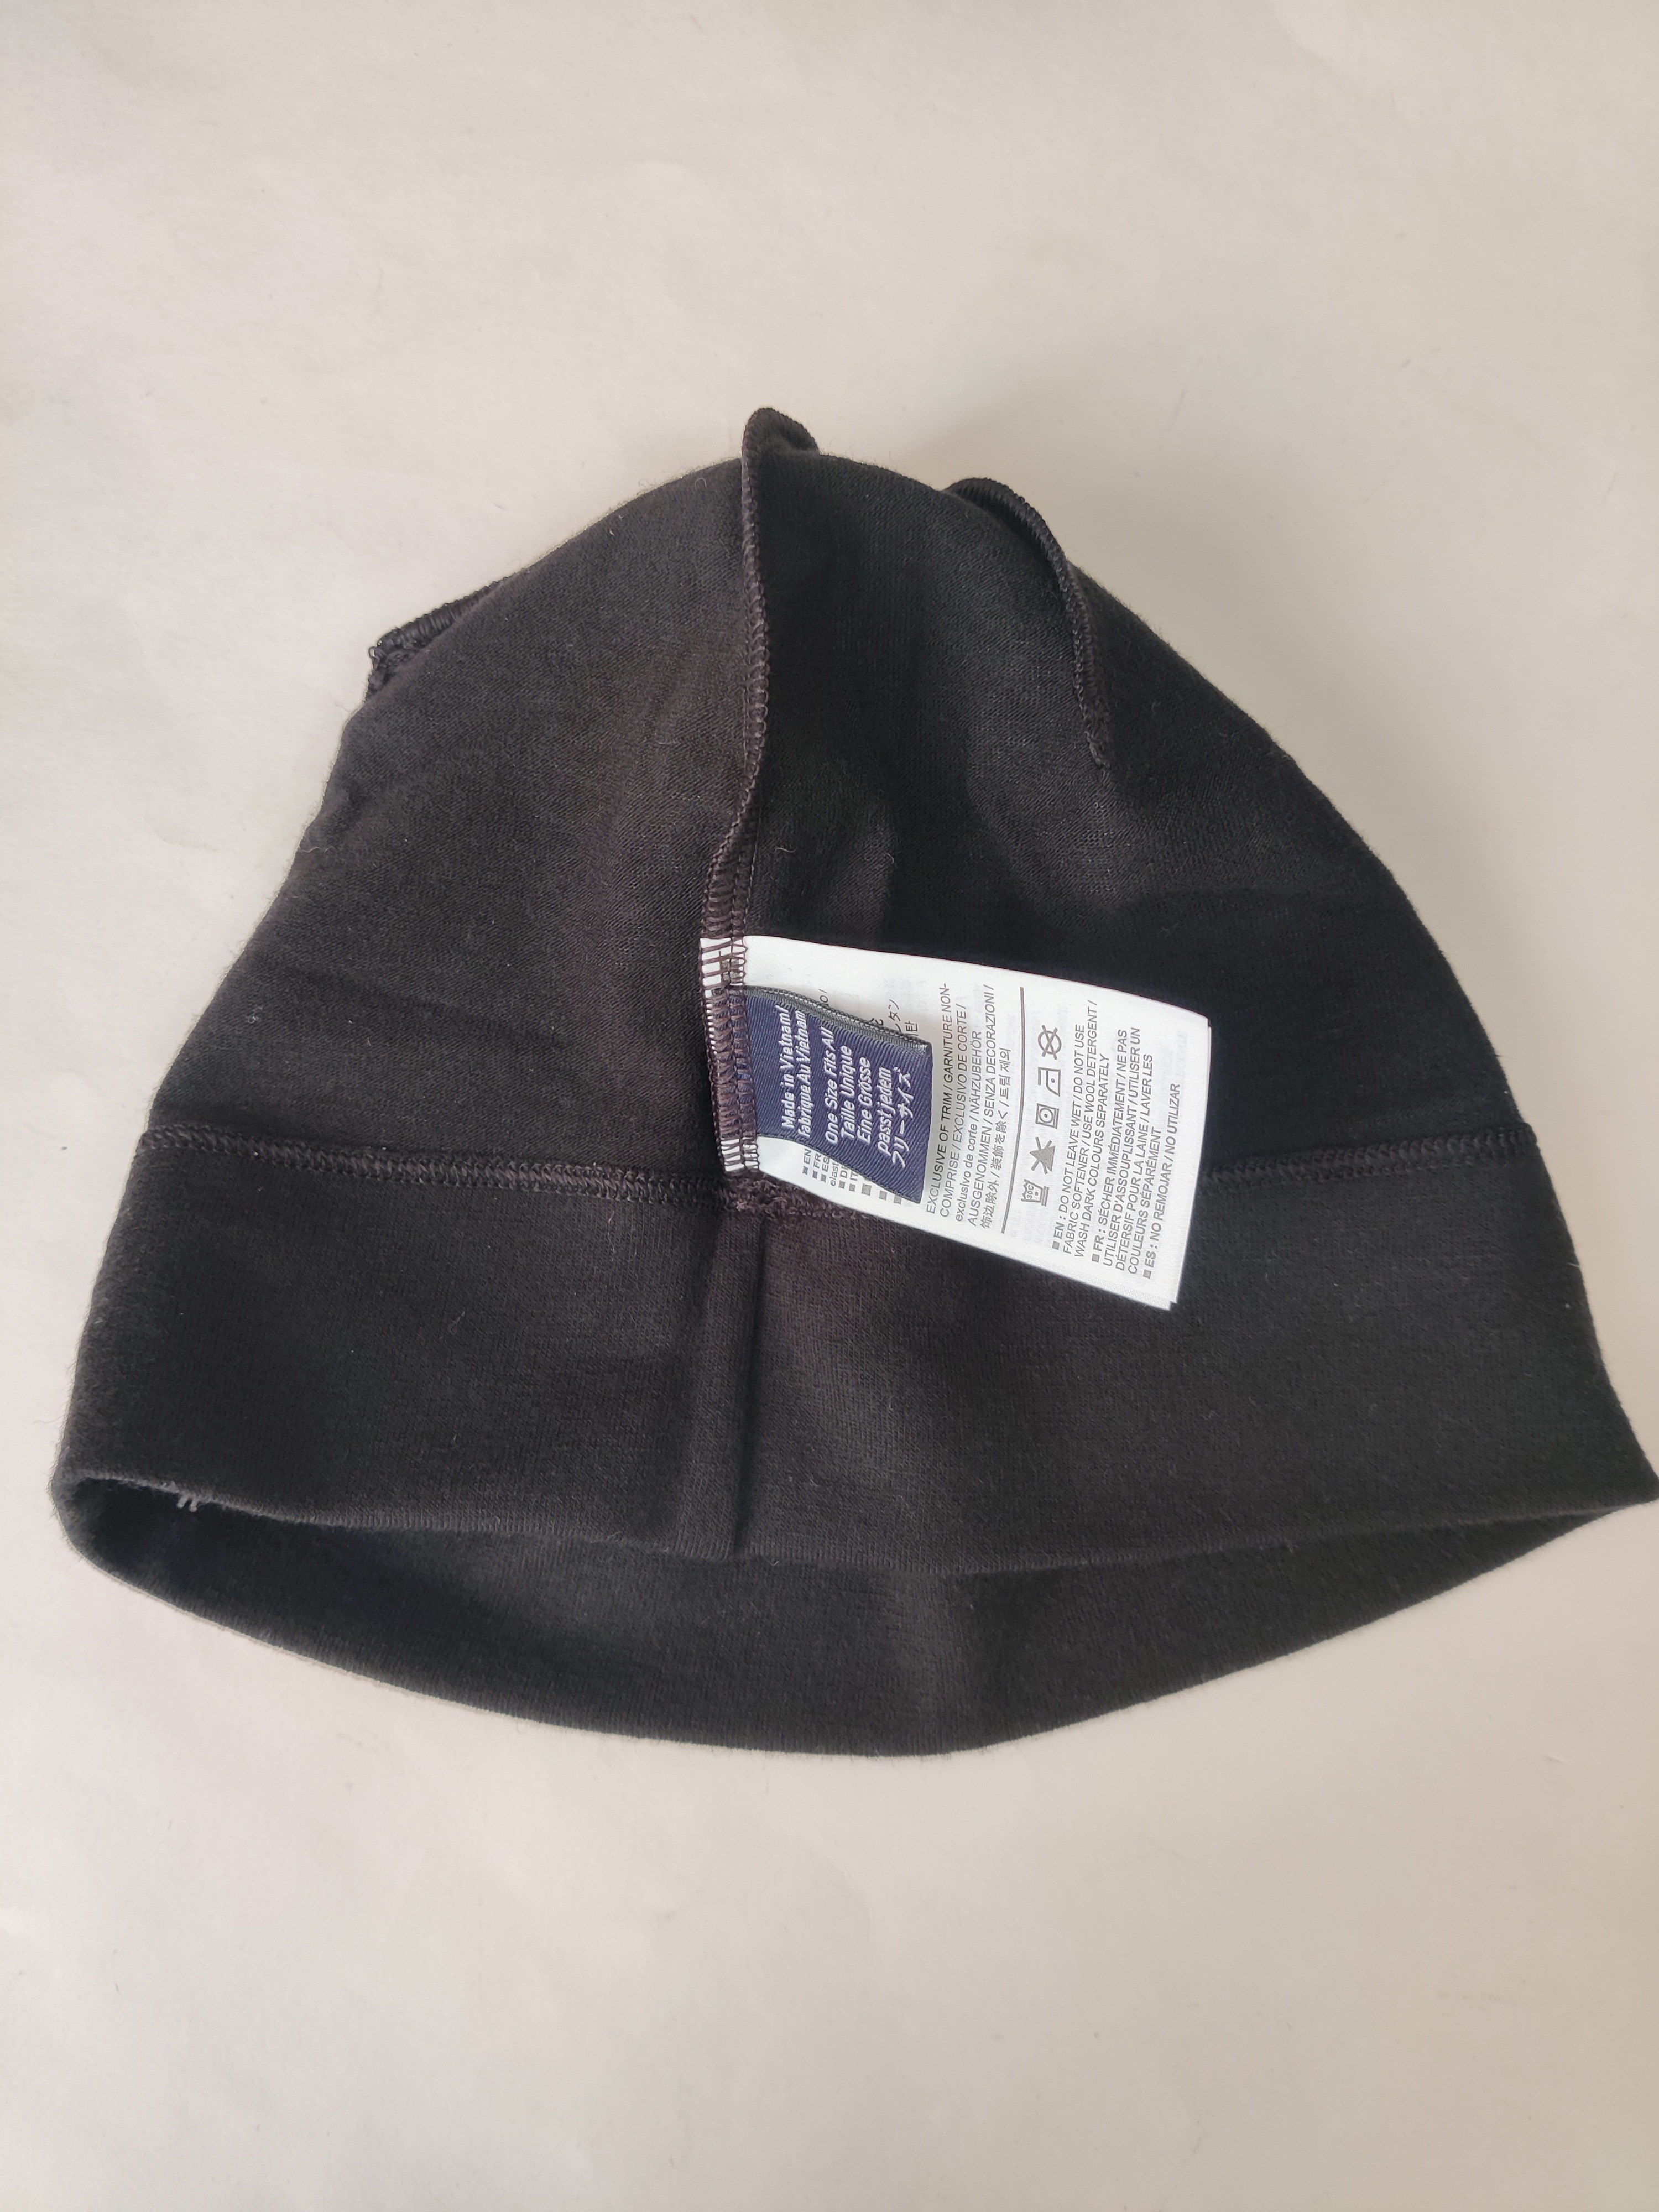 Rho LTW Merino Wool Beanie Thin Hat Winter Black Travel Outdoor Cap - 7